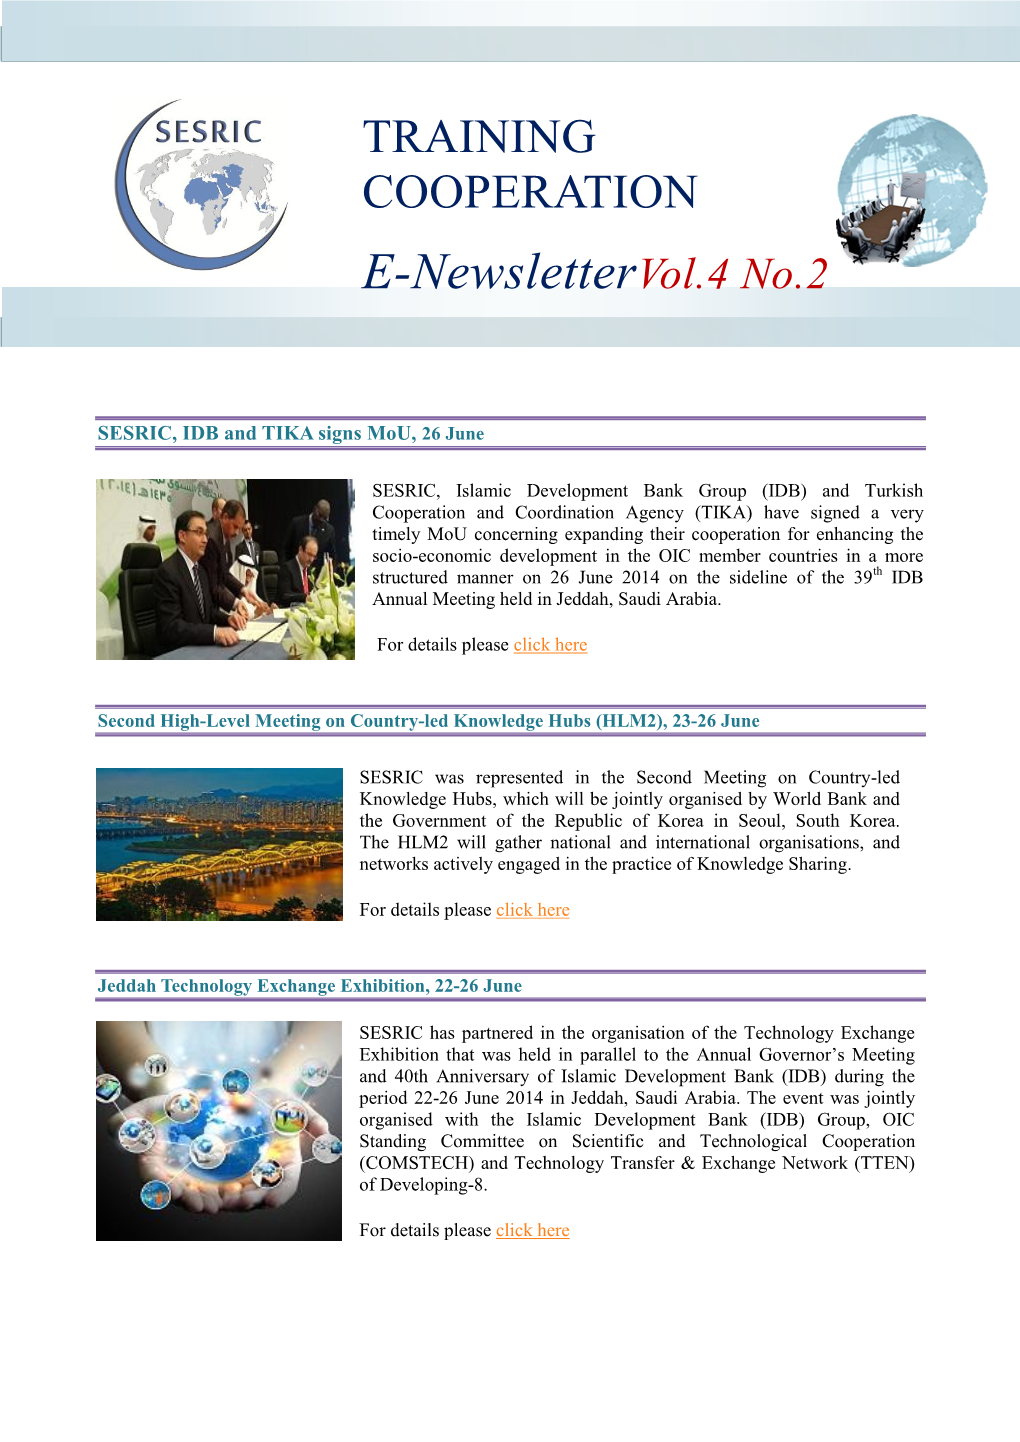 E-Newslettervol.4 No.2